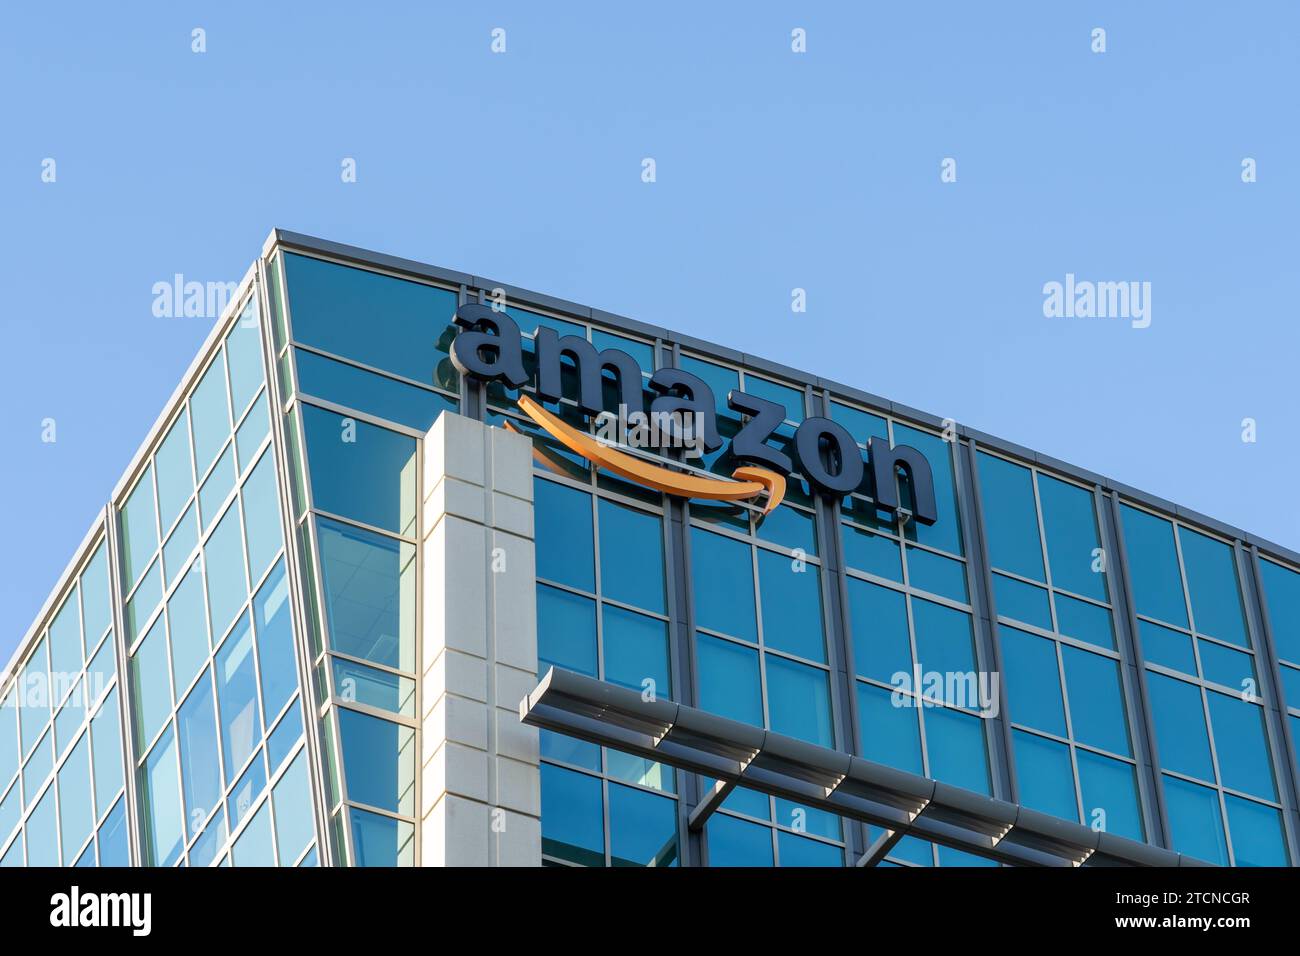 Amazon office building in Sunnyvale, California, USA Stock Photo